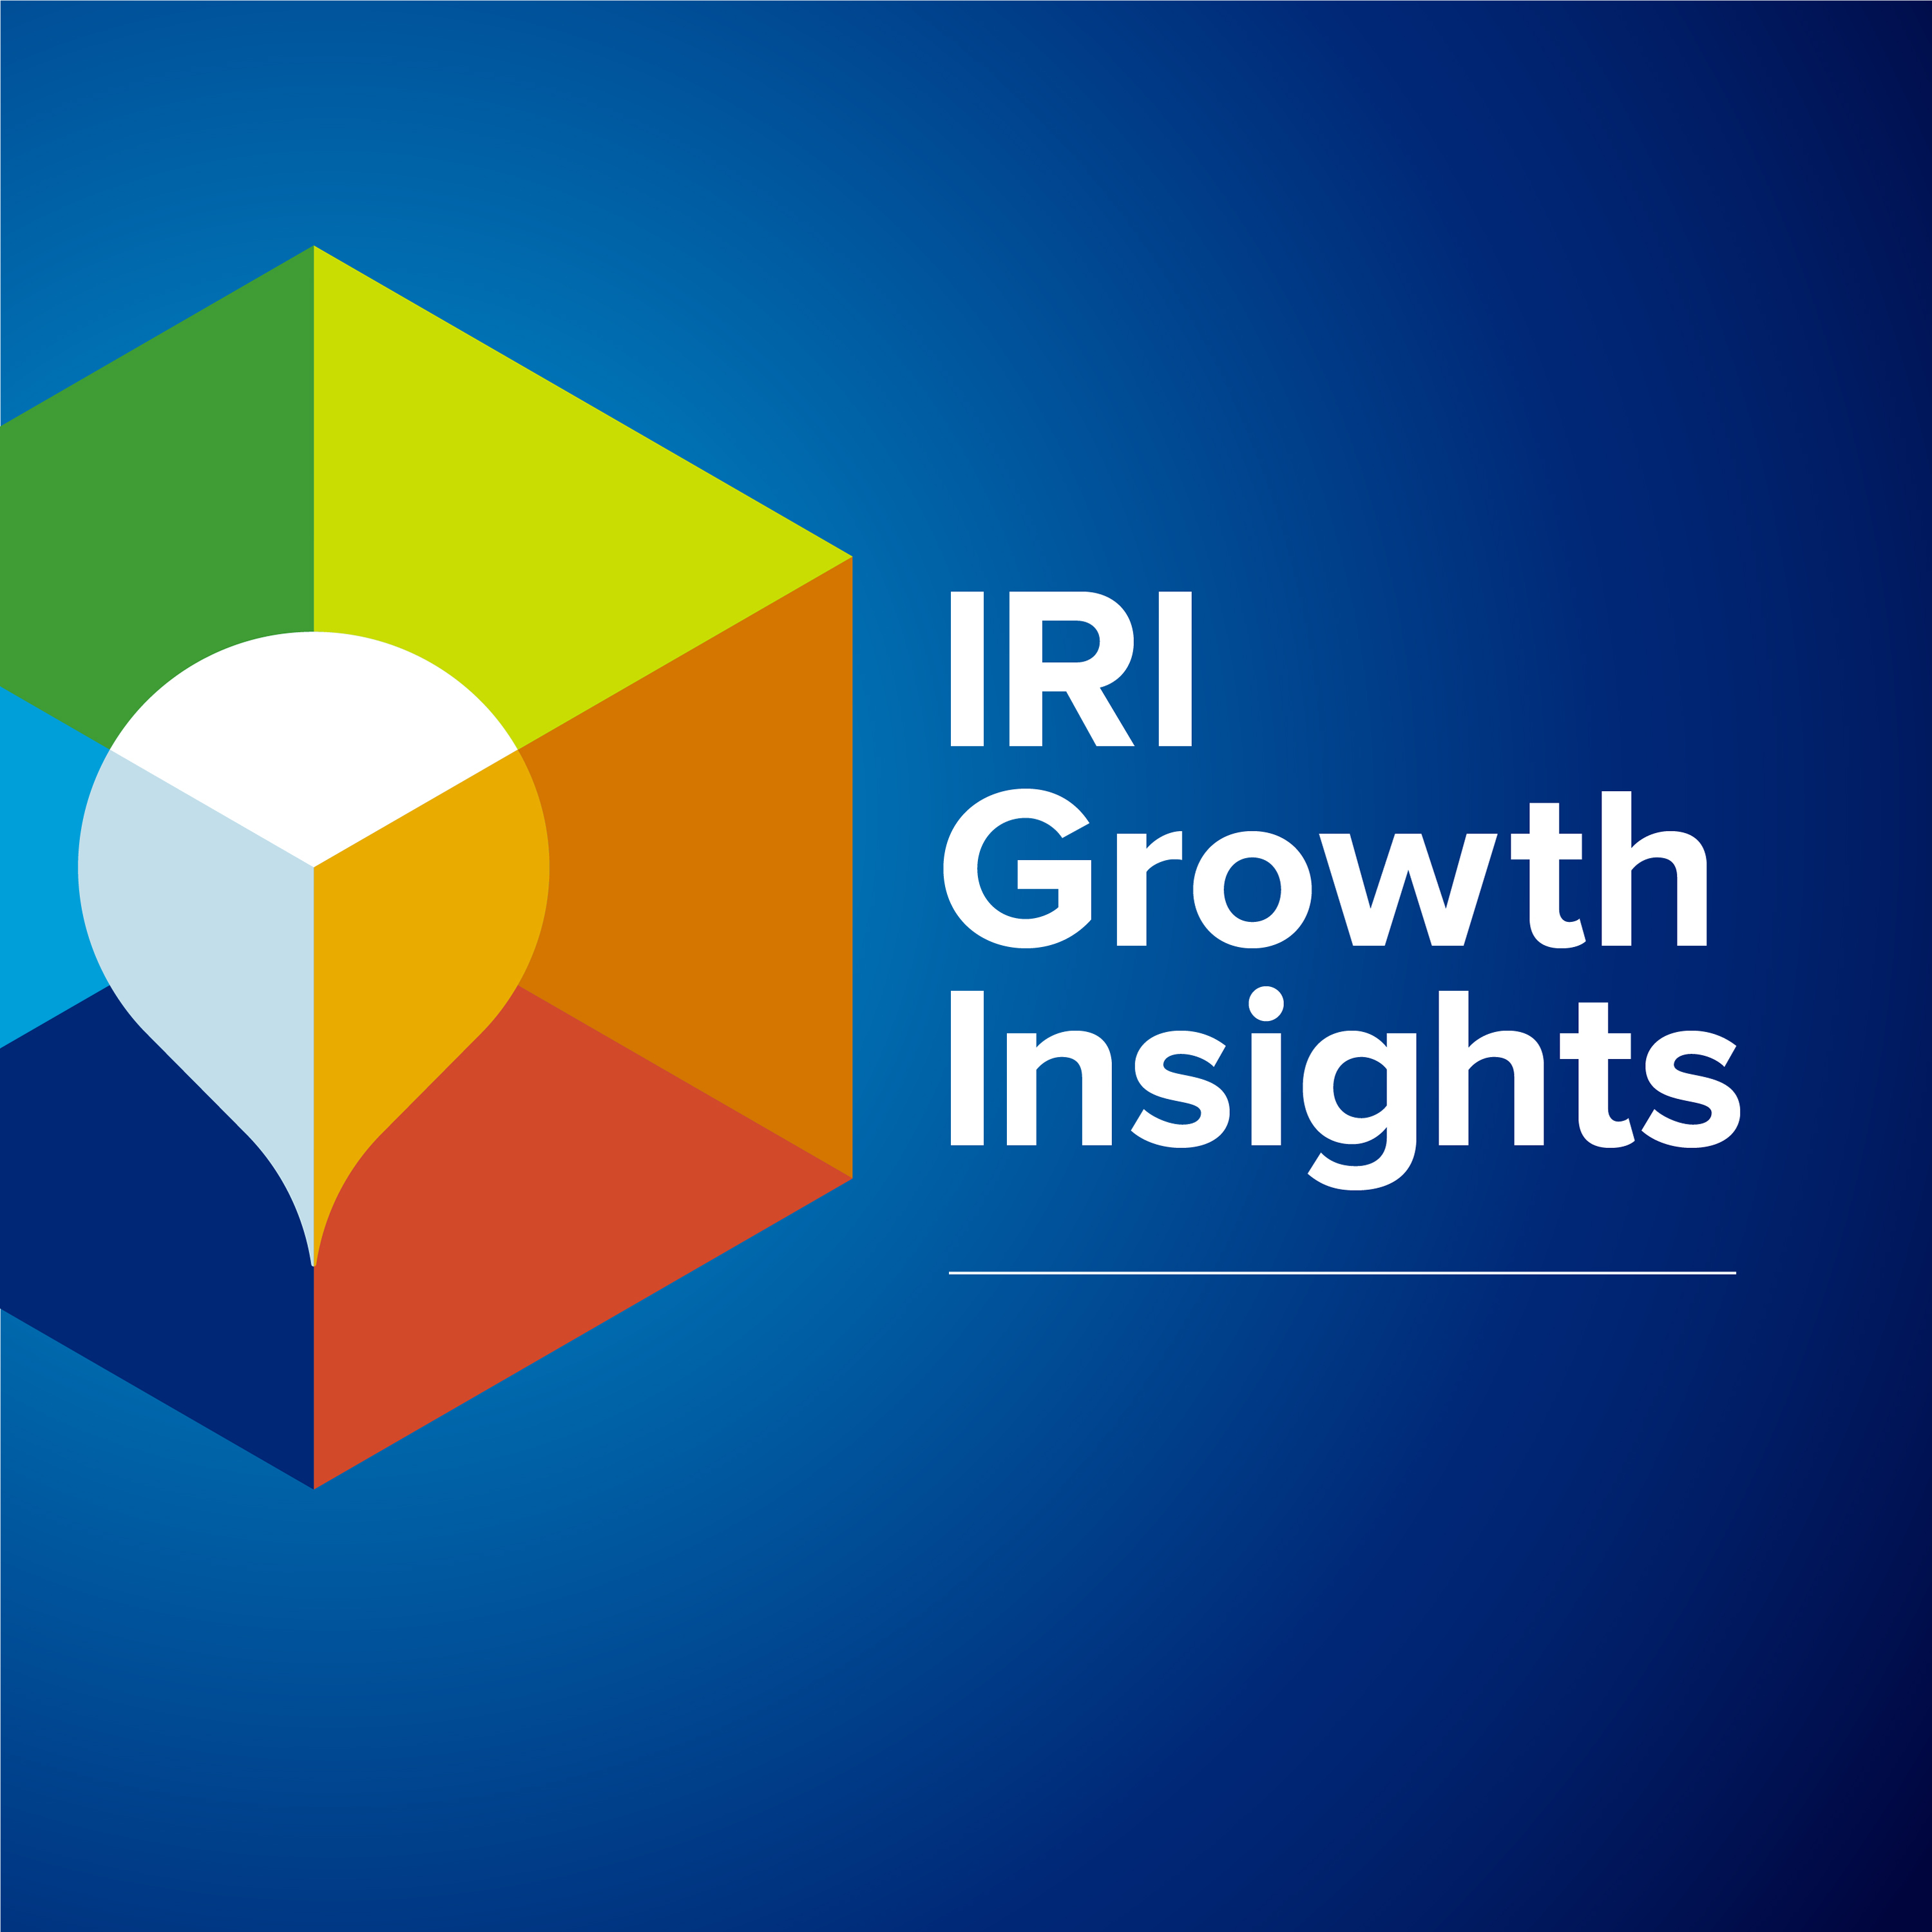 IRI Growth Insights